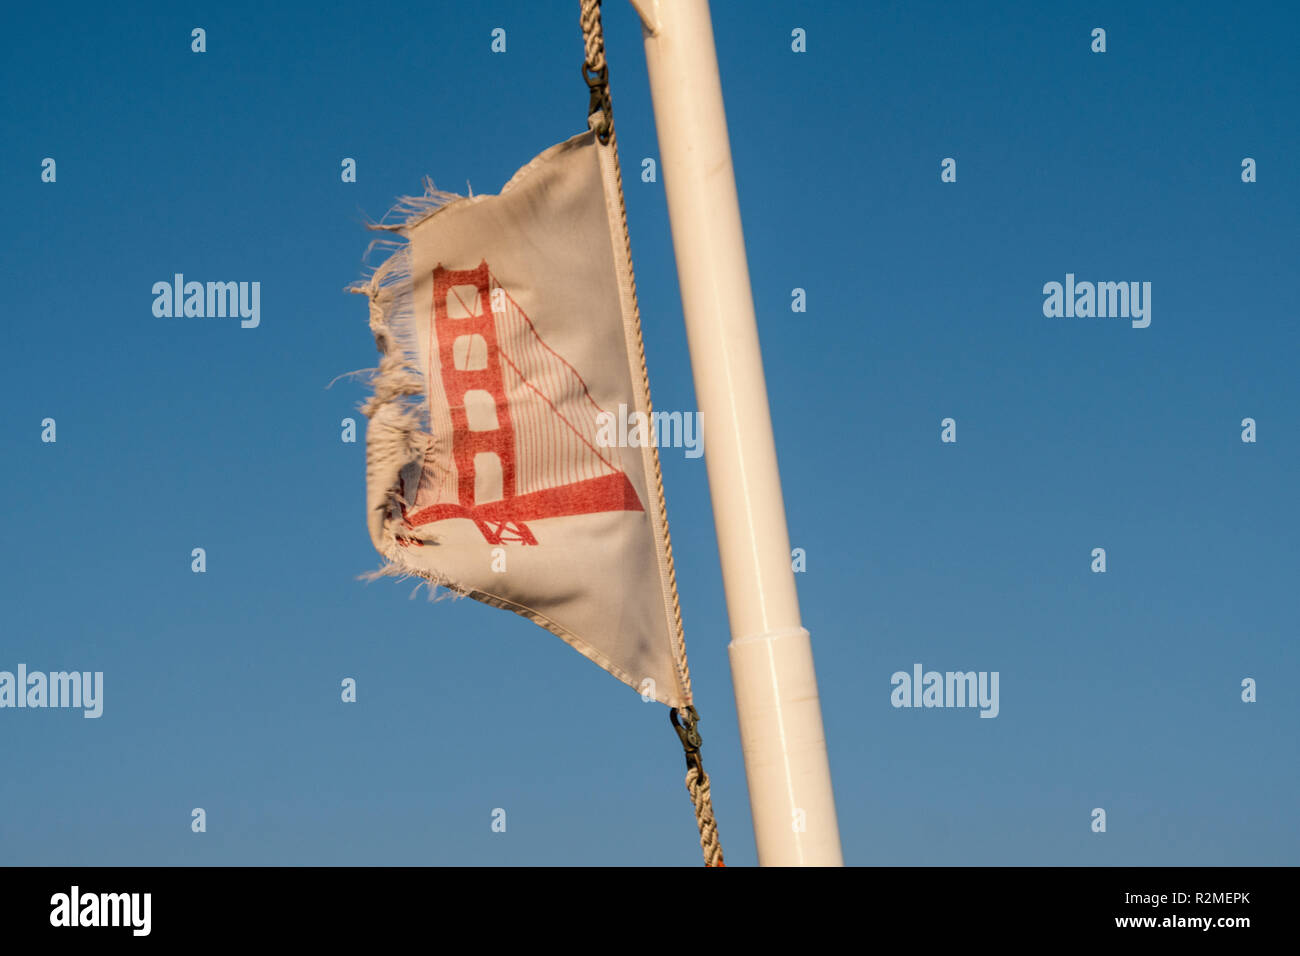 San Francisco, ferry, flag with SF logo Stock Photo